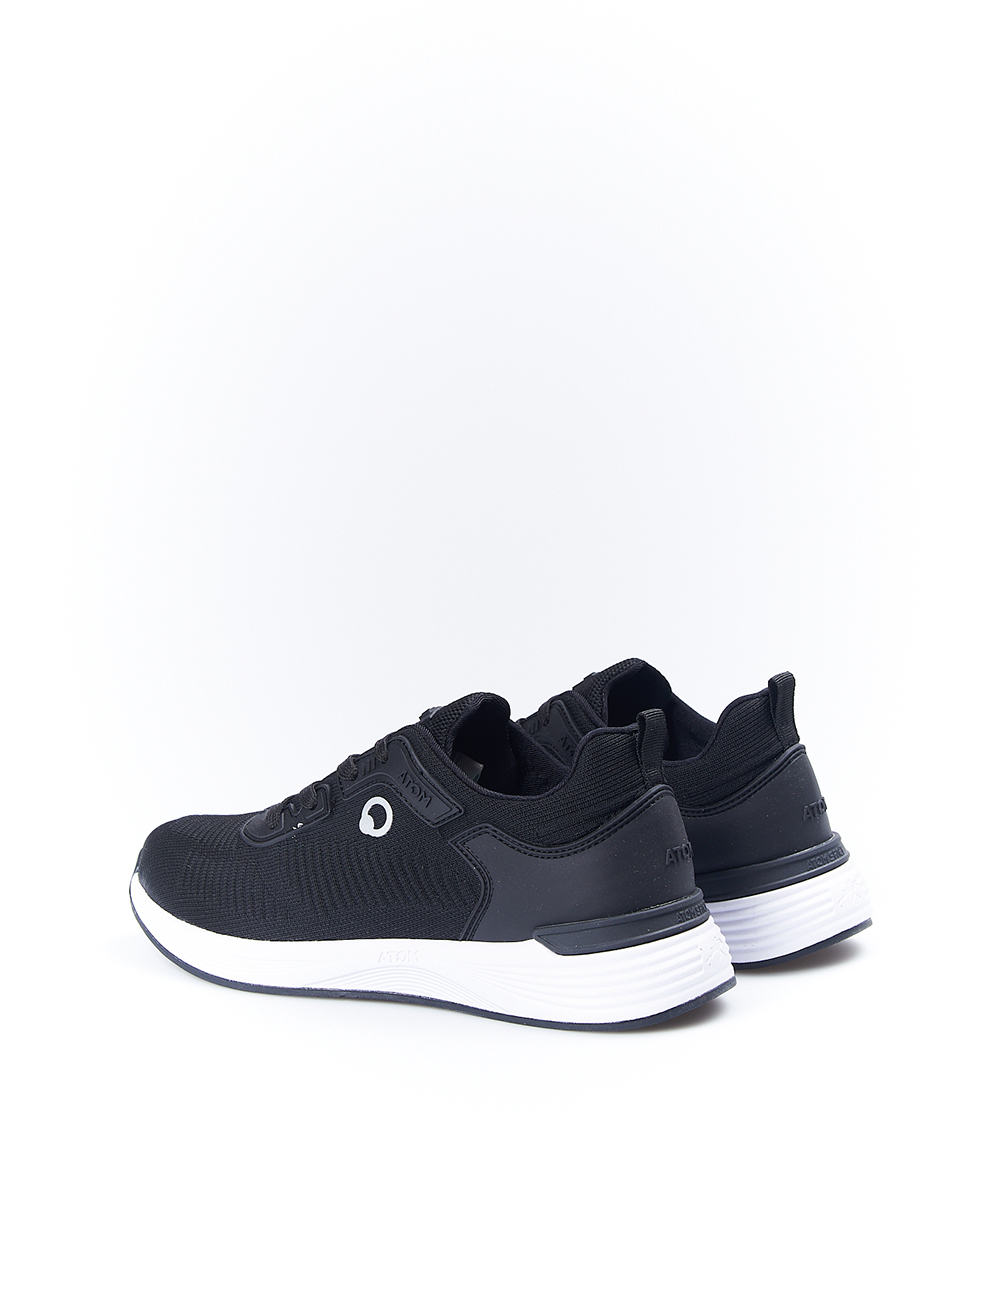 Zapatos Deportivos Atom By Fluchos At107 - Negro - Sneakers Para Mujer  MKP